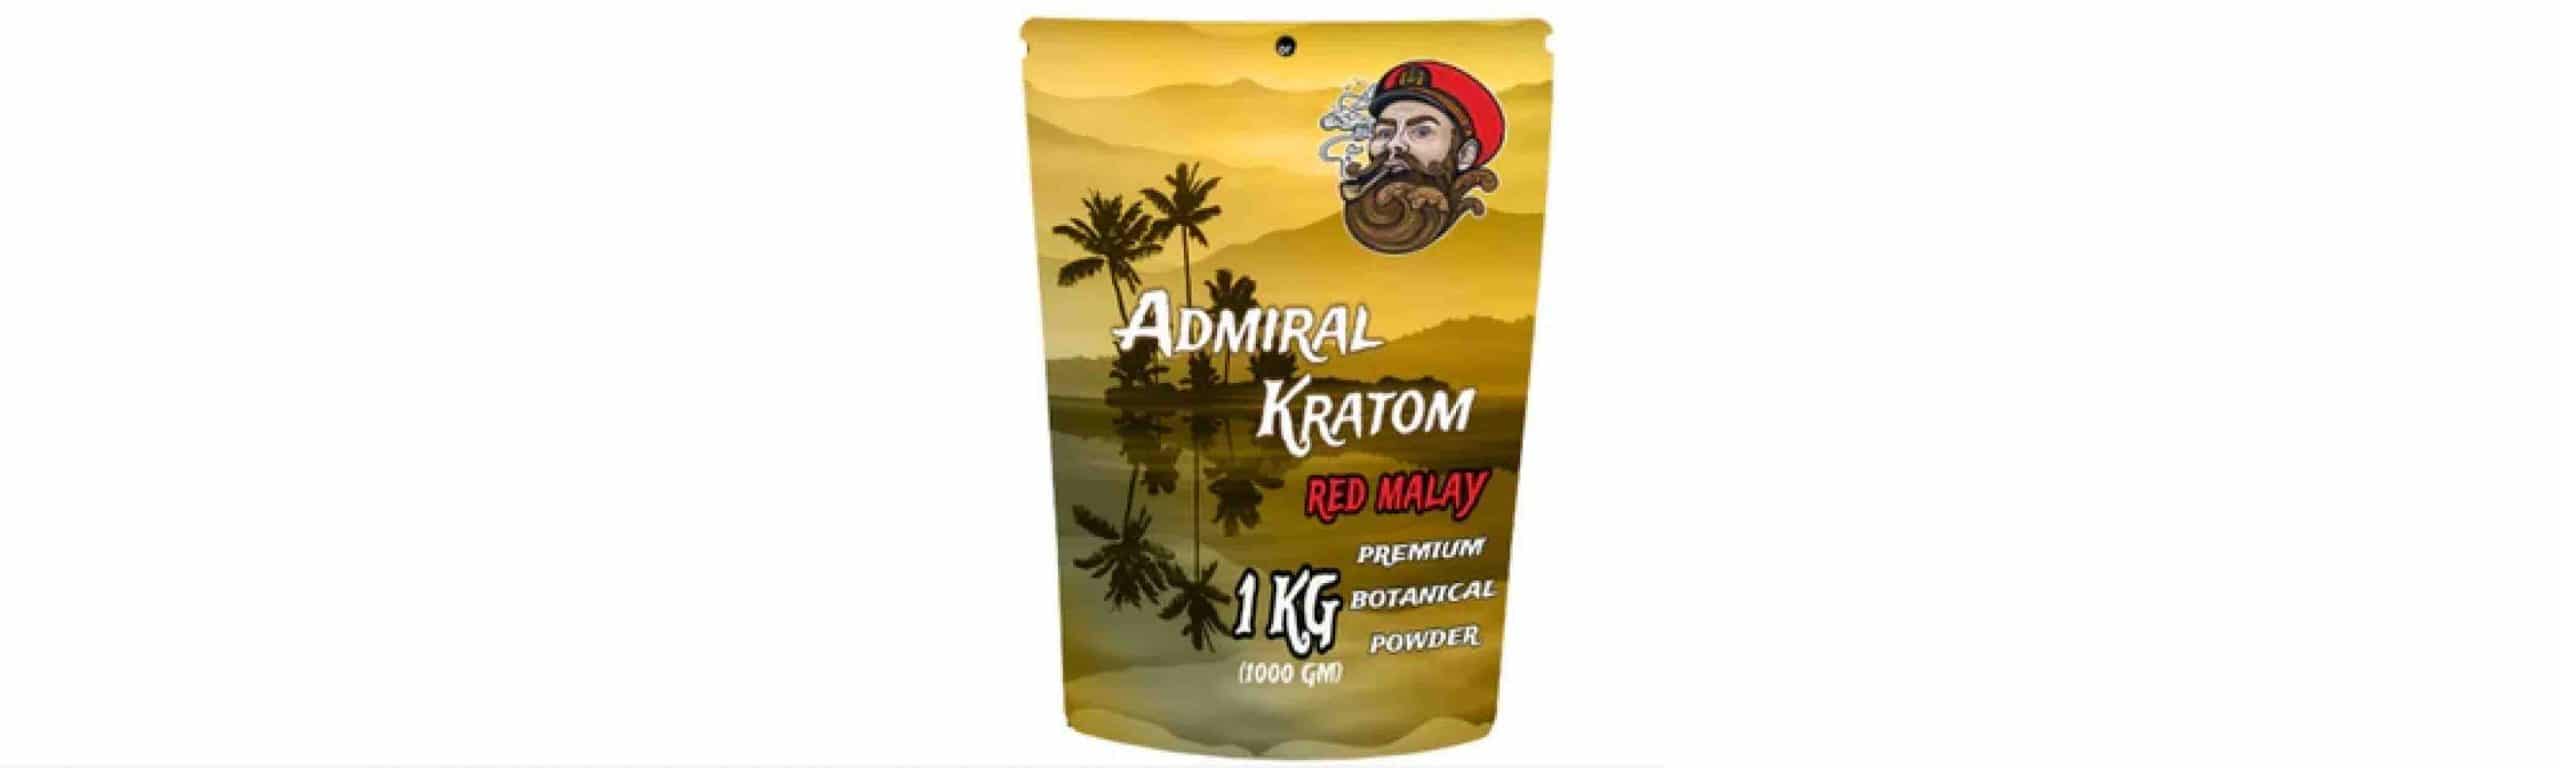 image of admiral kratom vendor review